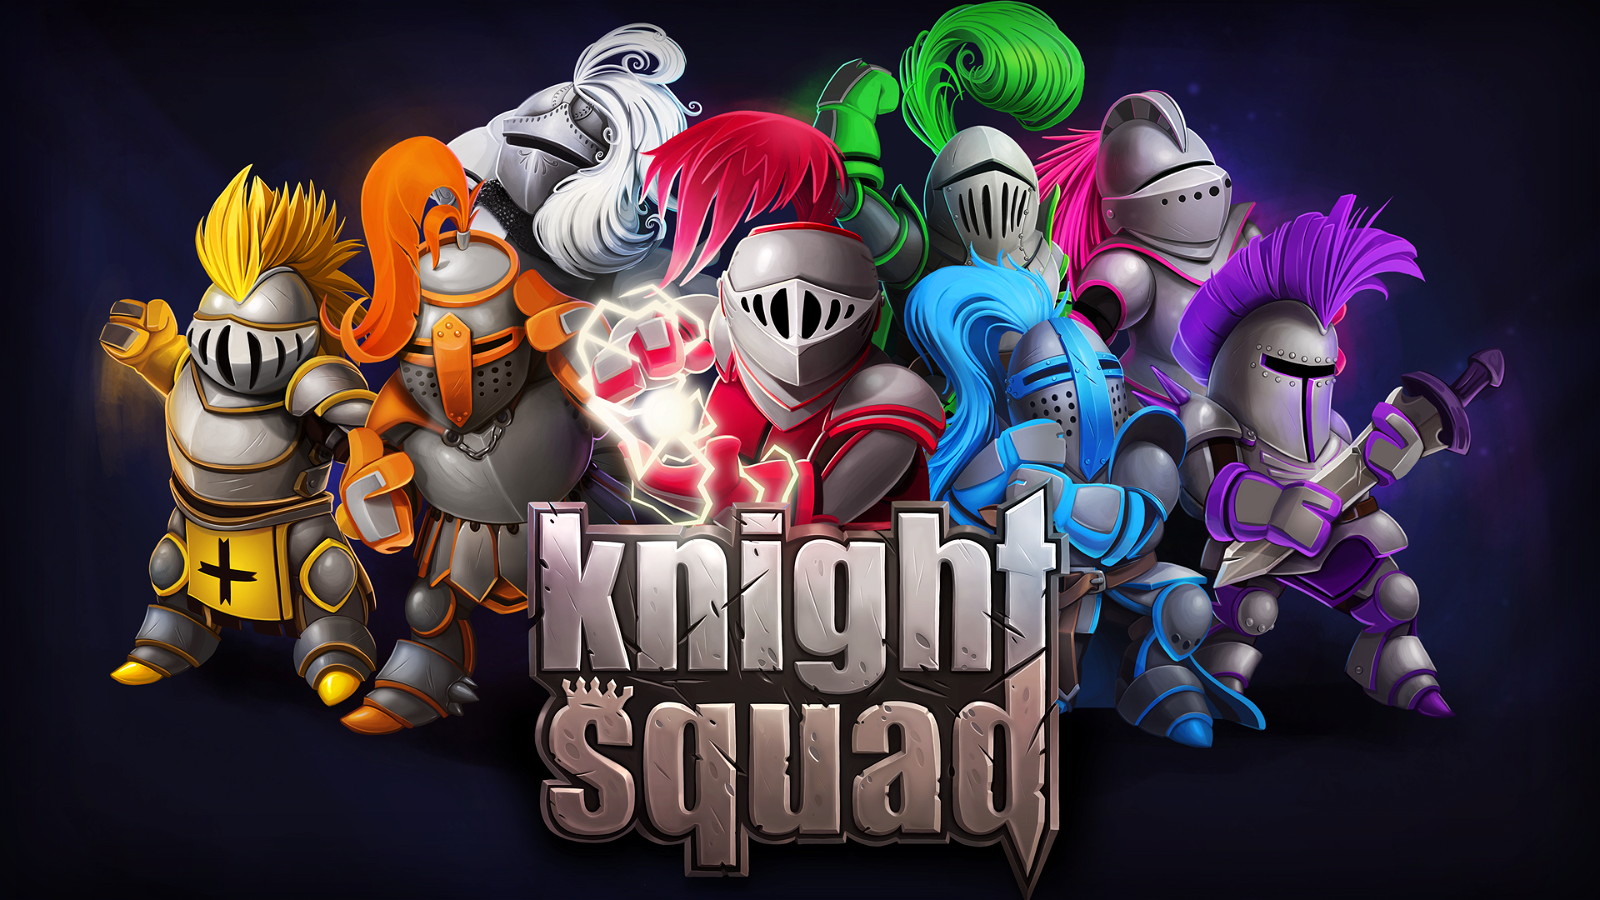 Image of Knight Squad